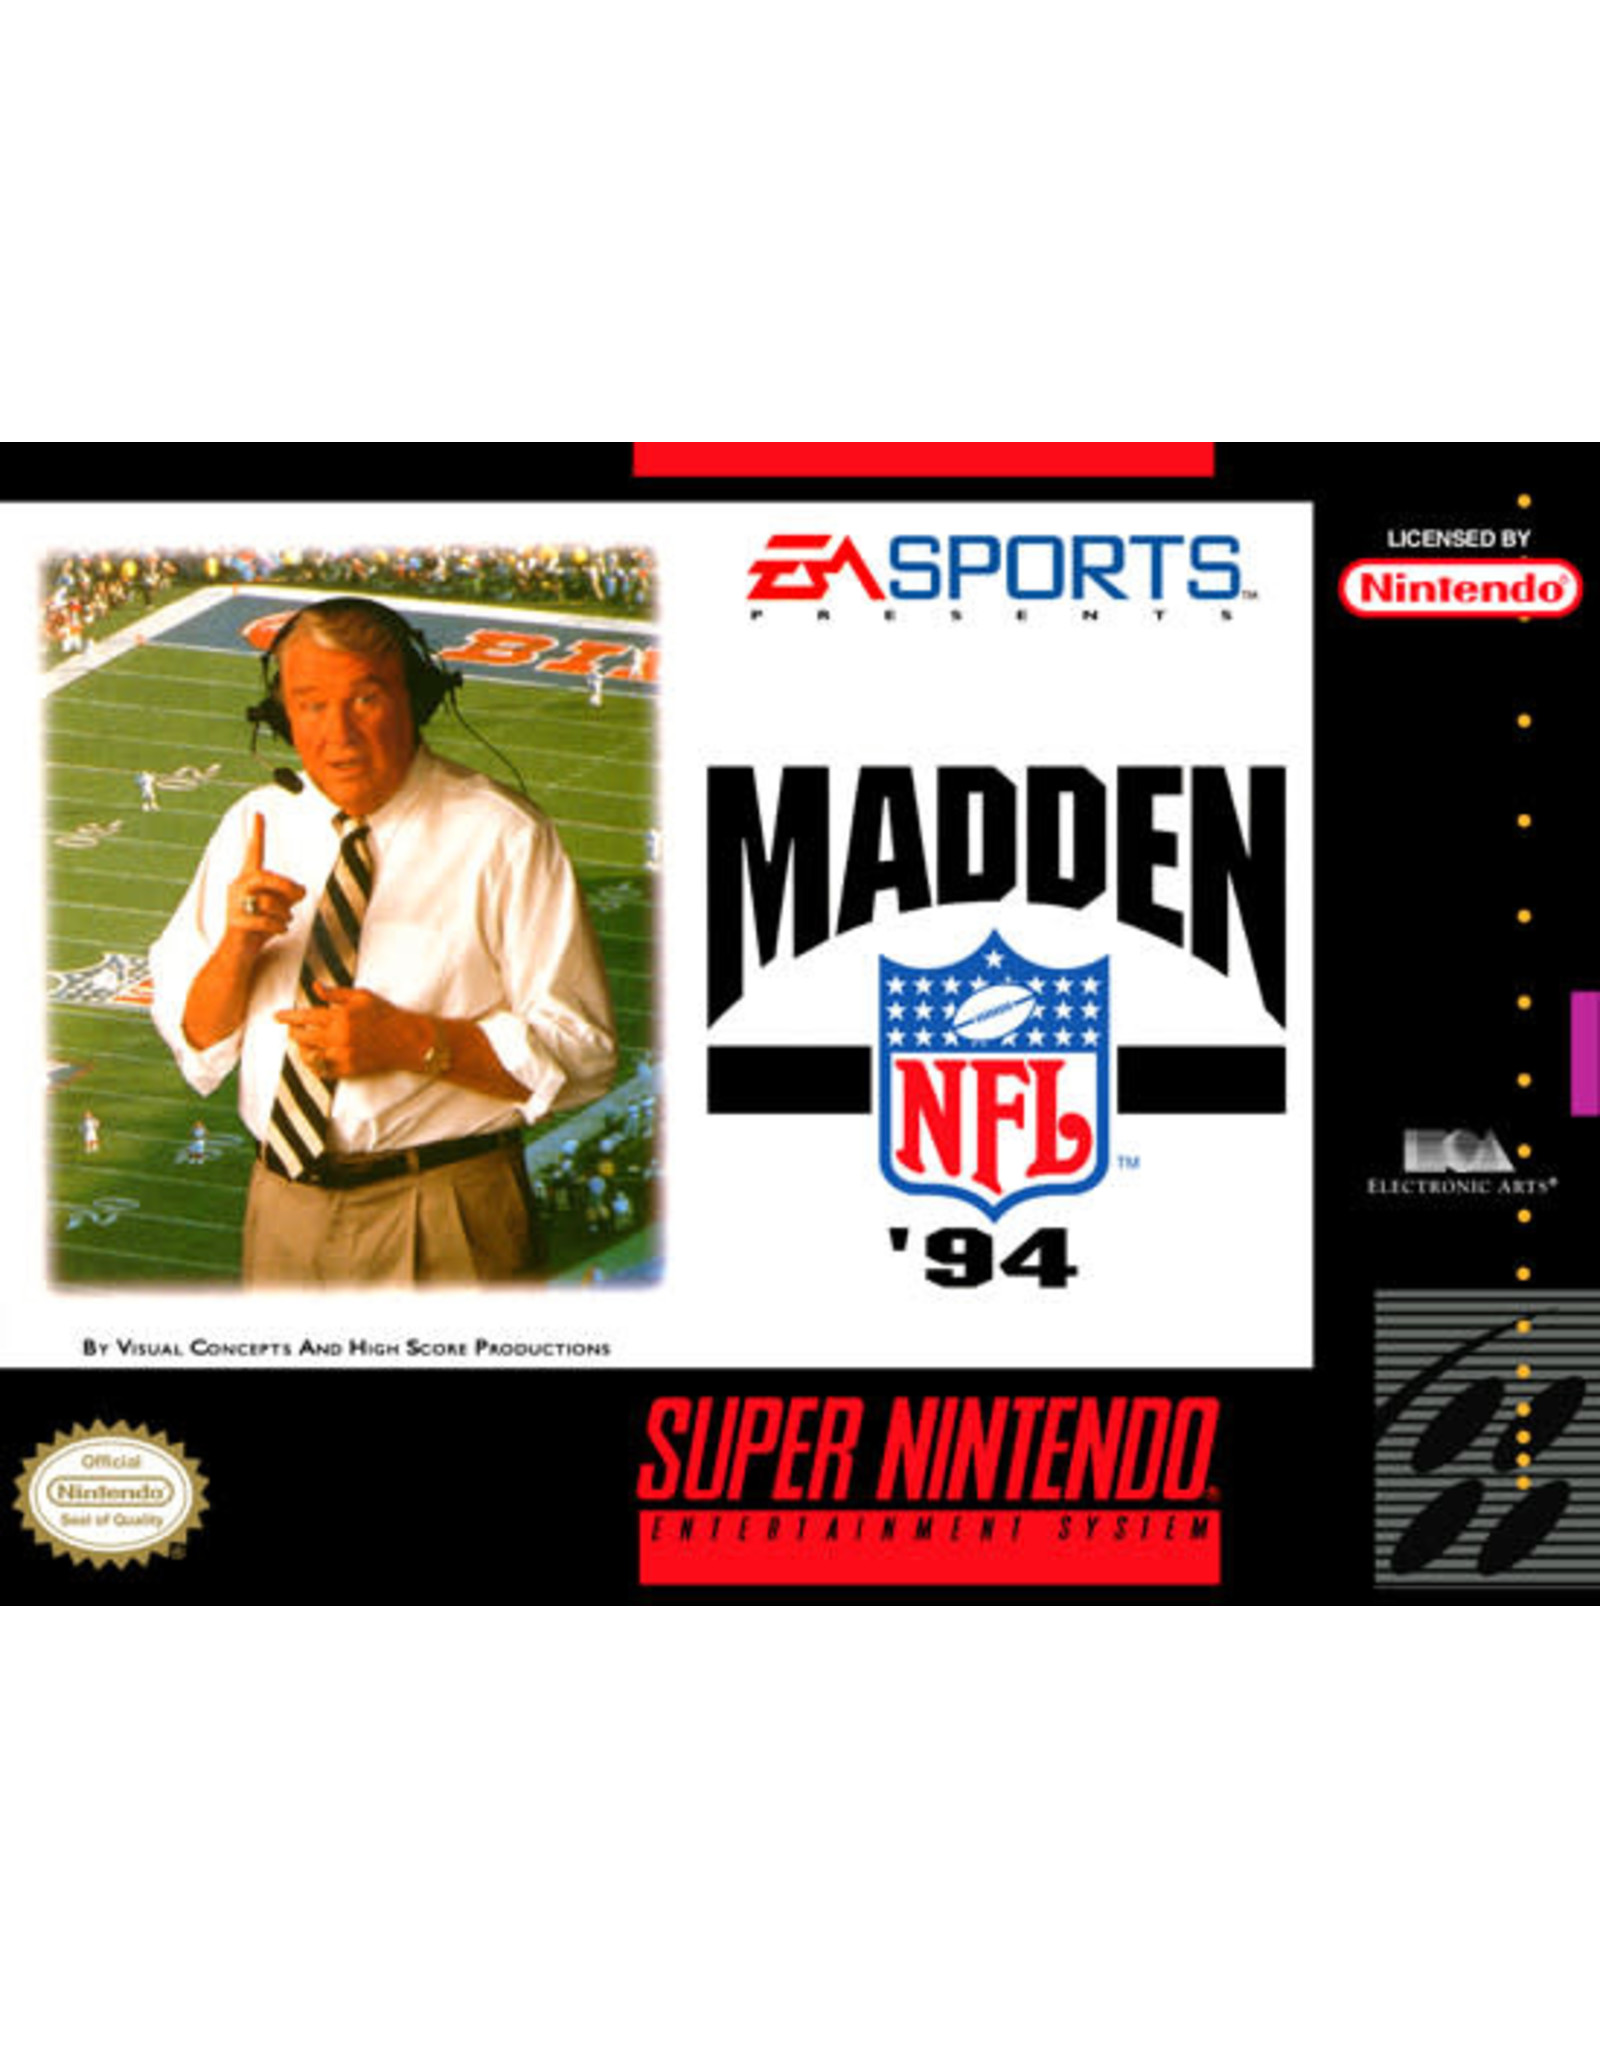 Super Nintendo Madden NFL '94 (Damaged Box, No Manual)